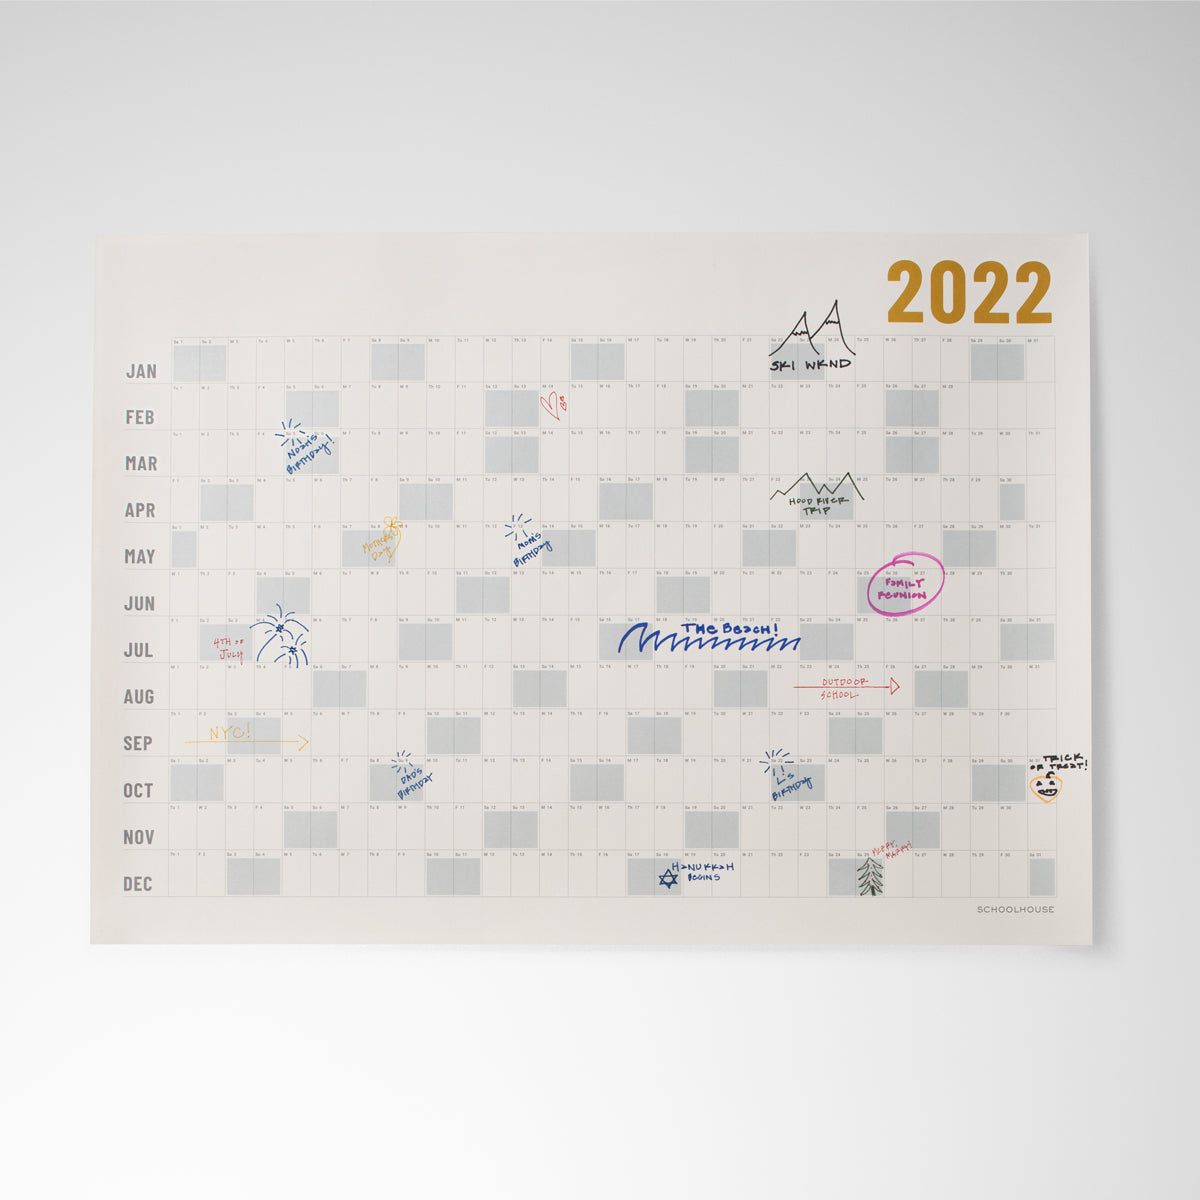 2022 calendar planne